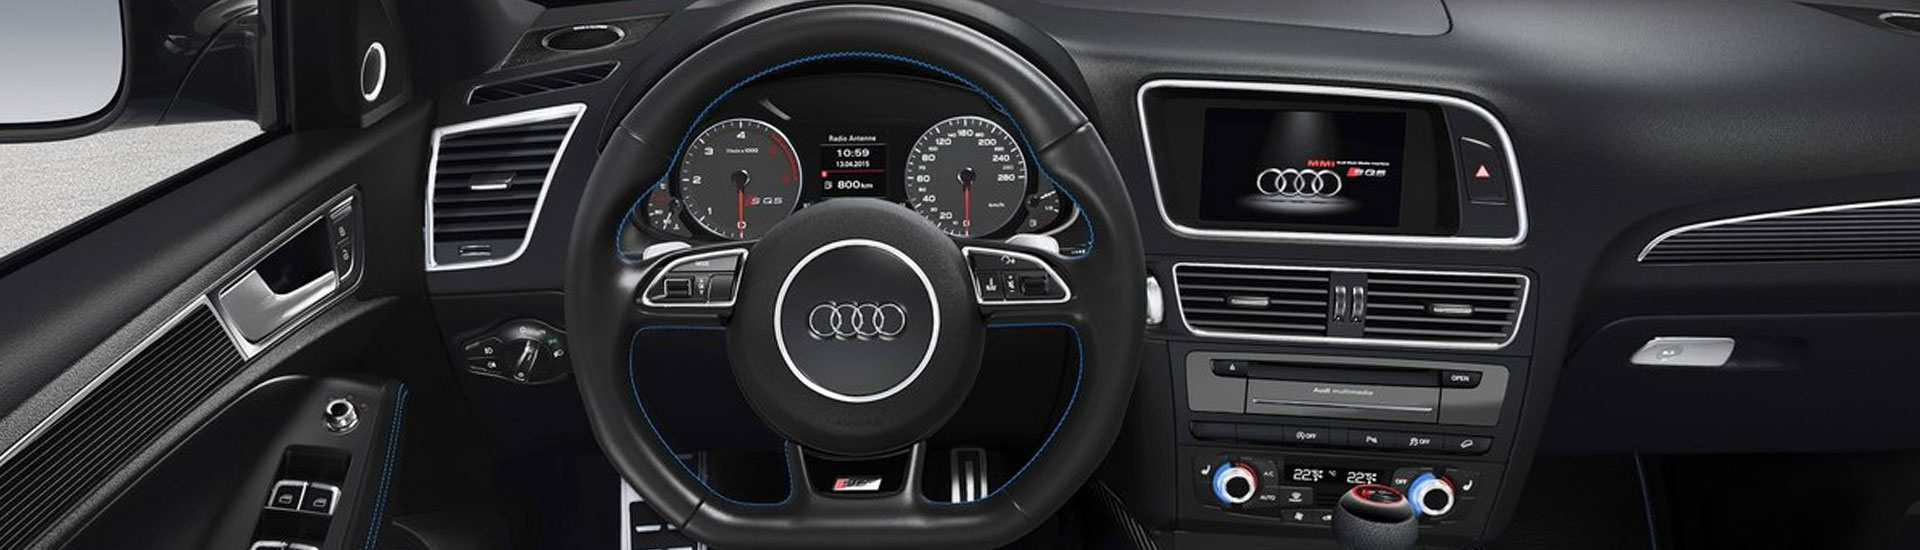 Audi SQ5 Custom Dash Kits